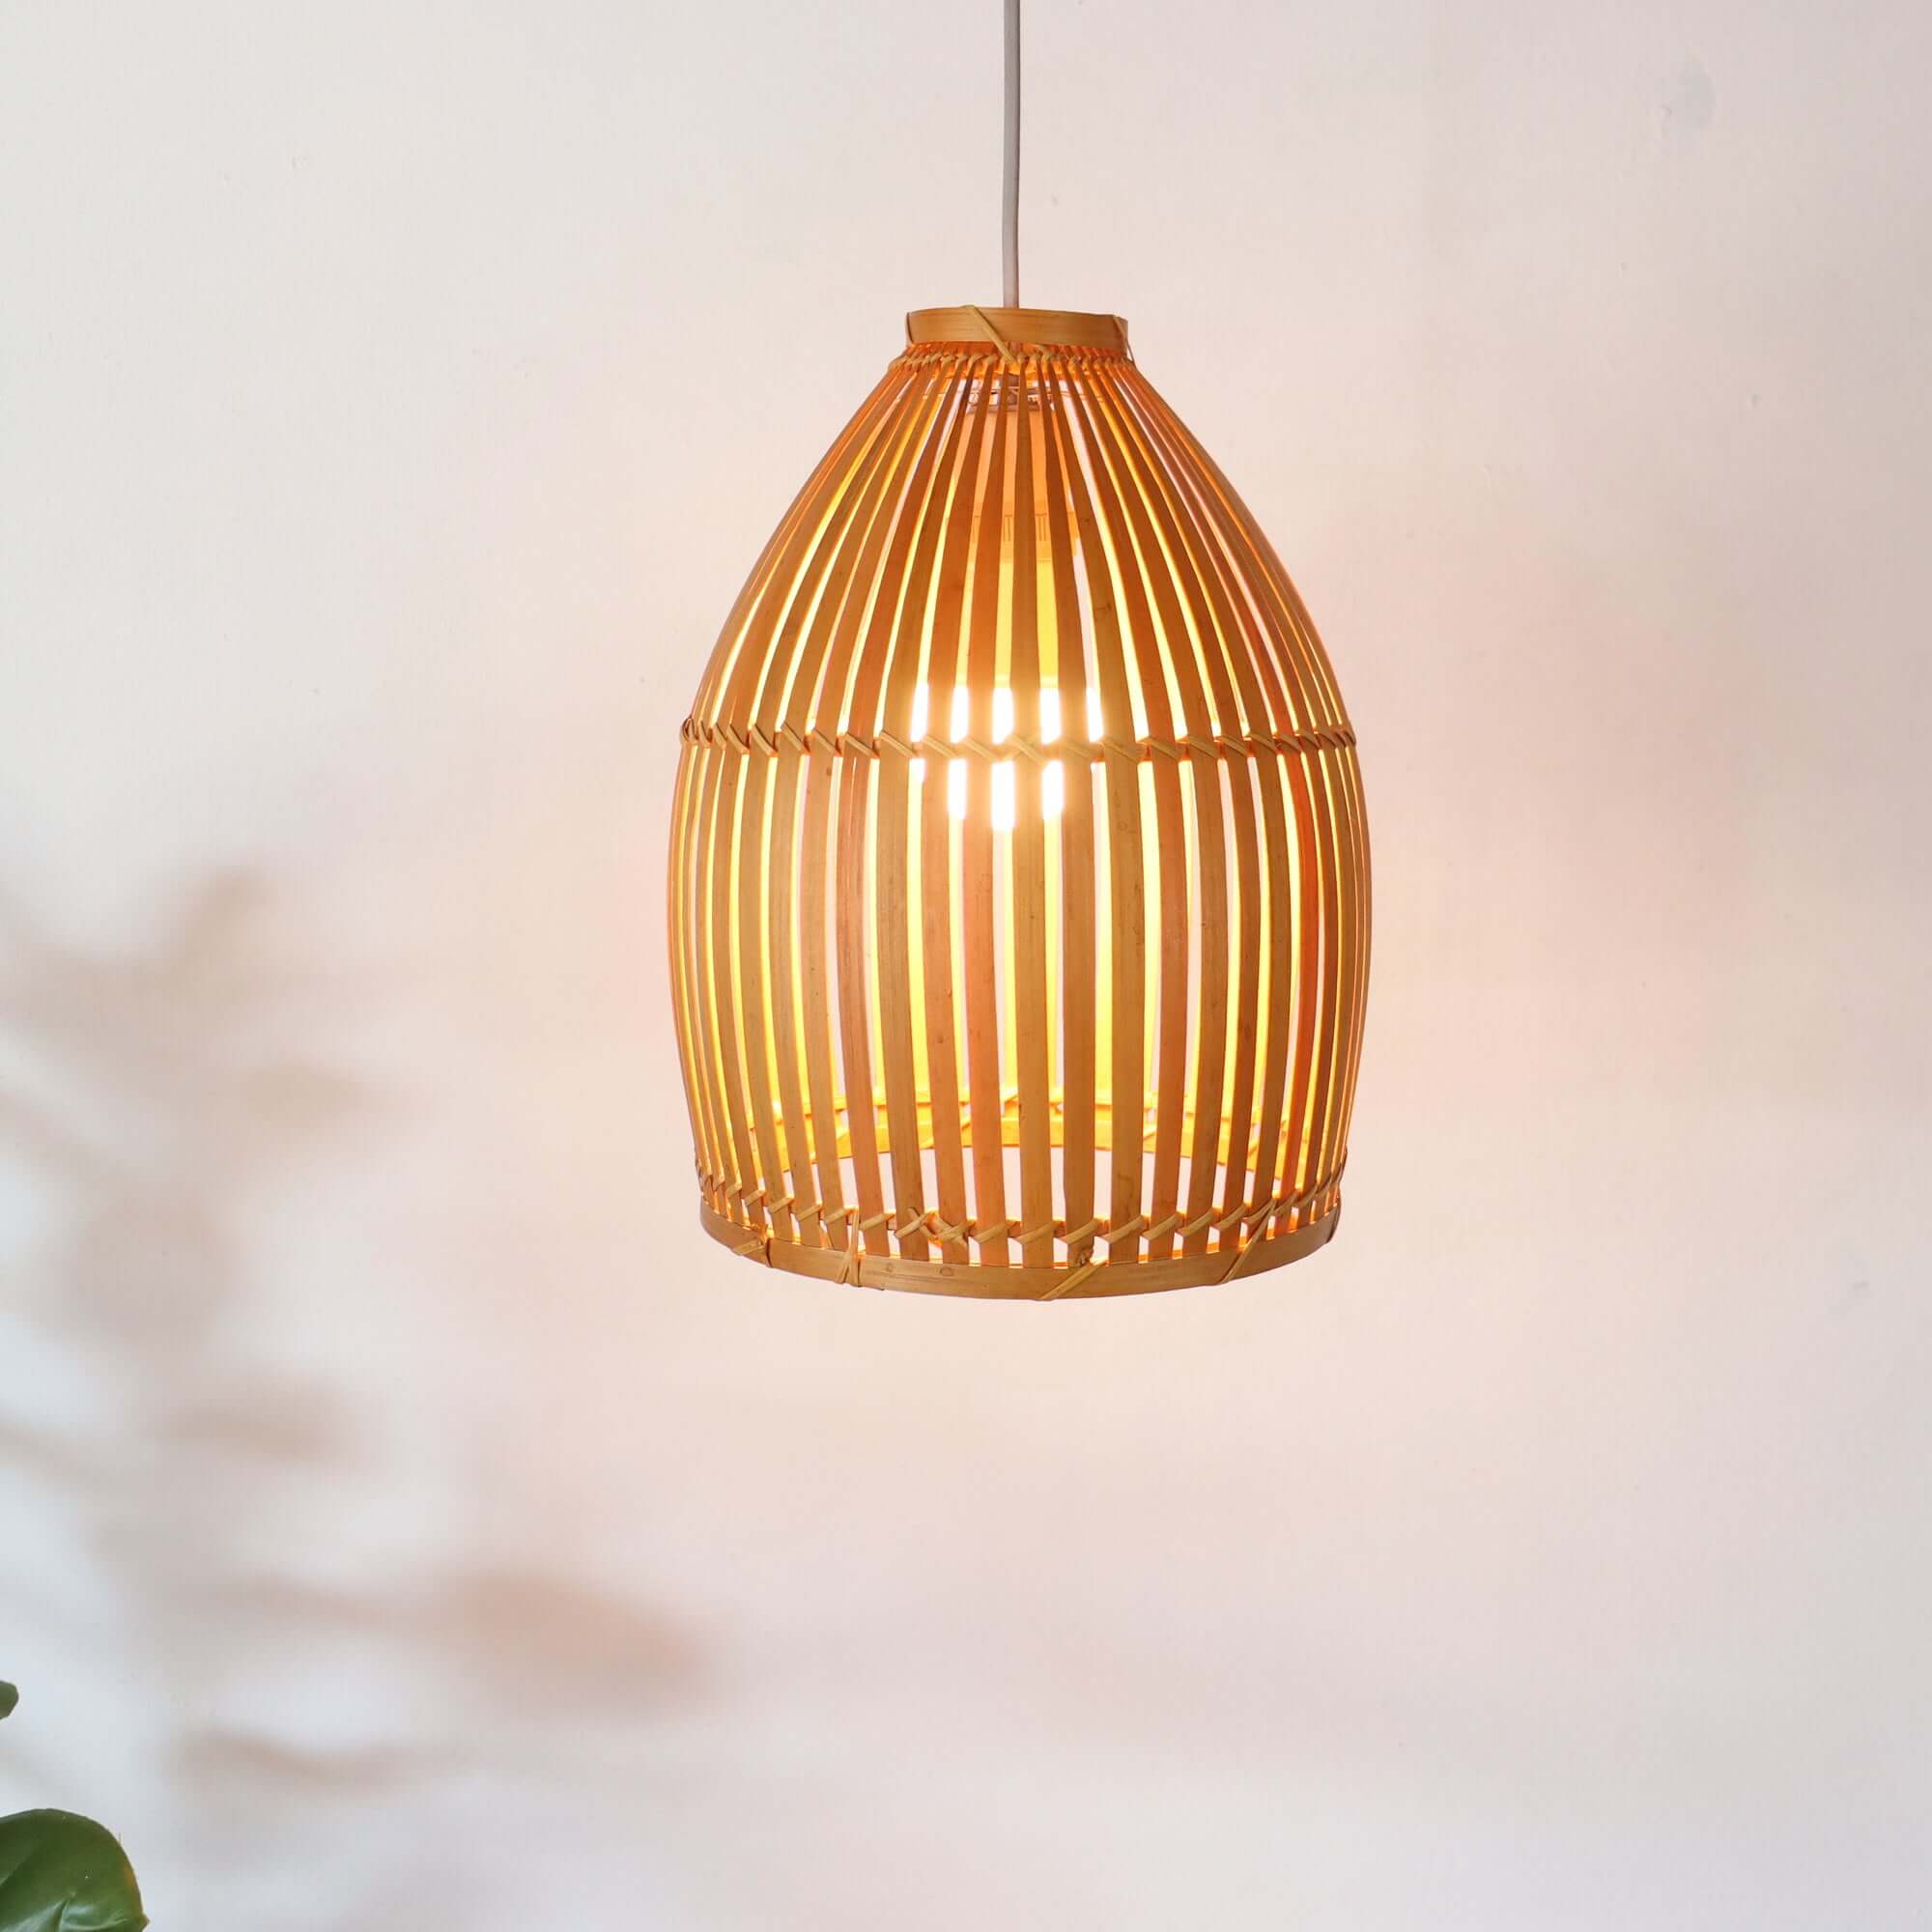 MINTRA - Bamboo Pendant Light Shade